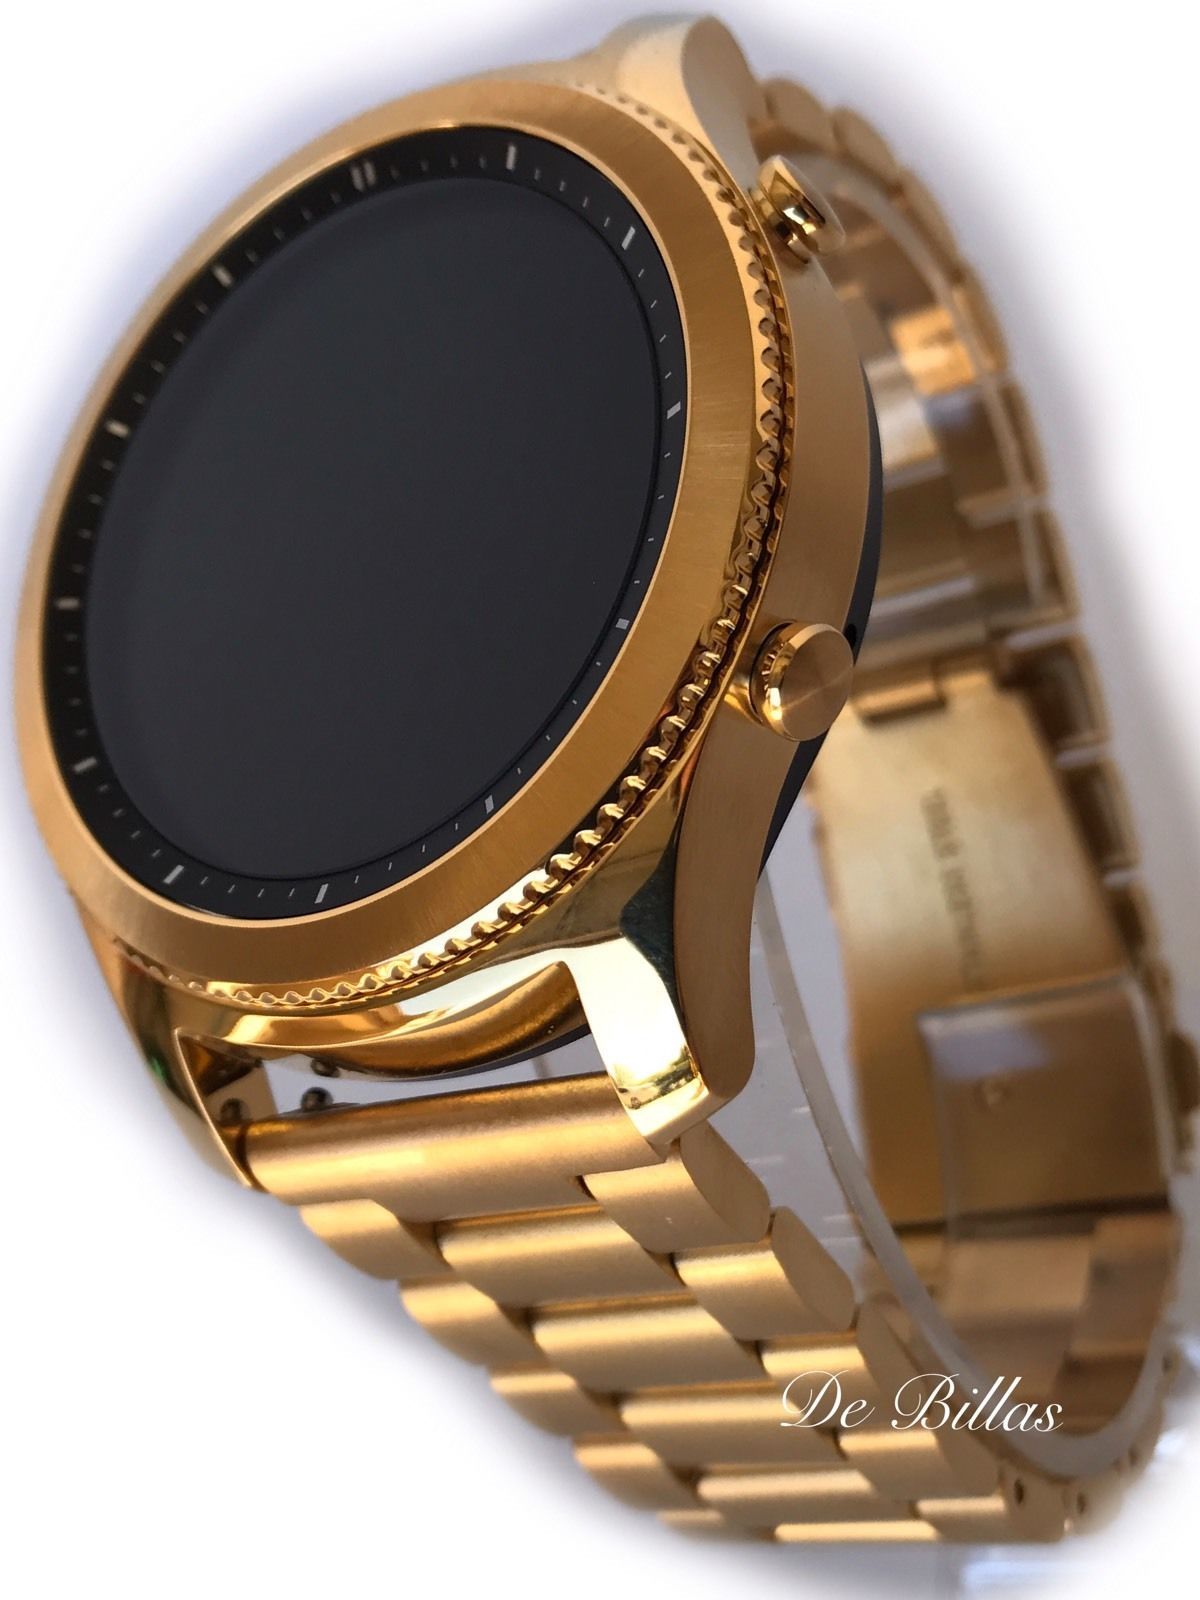 Galaxy watch gold. Самсунг Геар 3 золотые. Самсунг вотч золотые. Samsung Gear золотые. Часы самсунг галакси Голд.